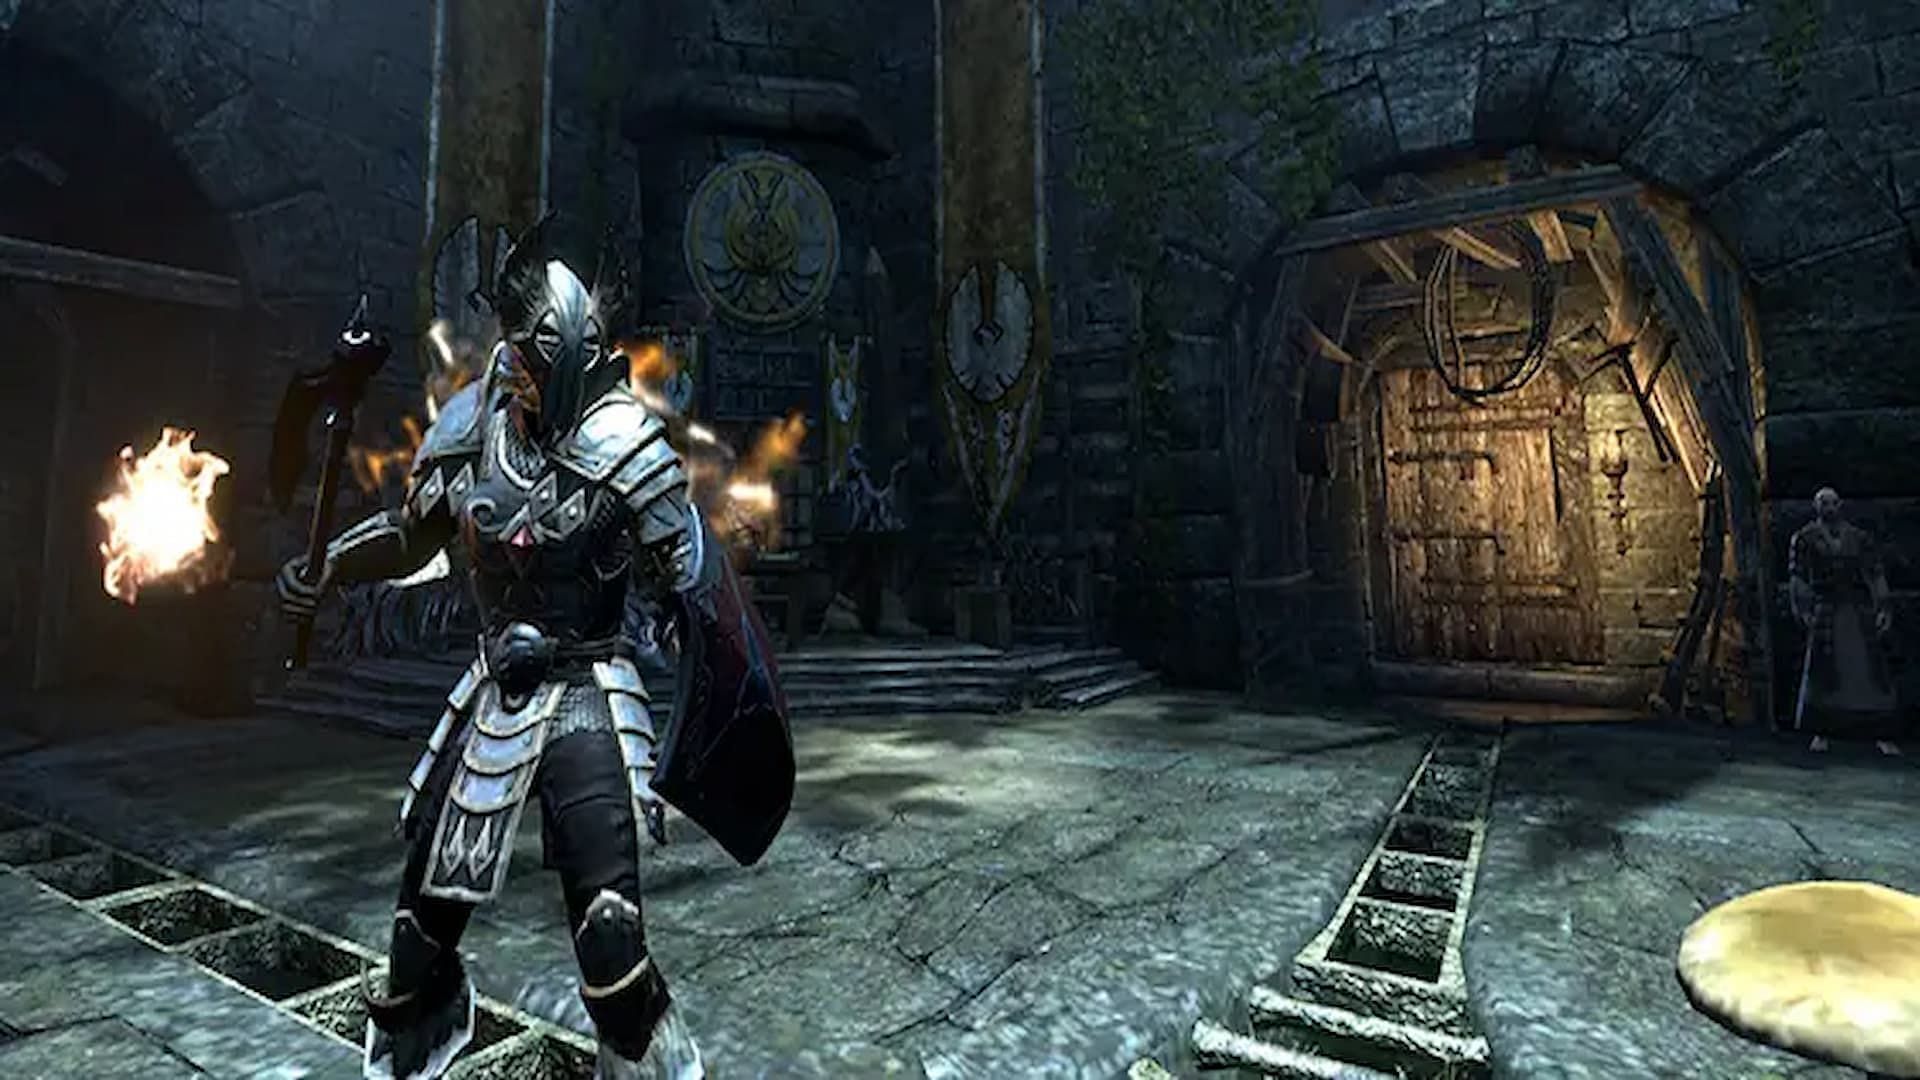 Dragonknight weilding an axe and shield with fireballs around in the Elder Scrolls online